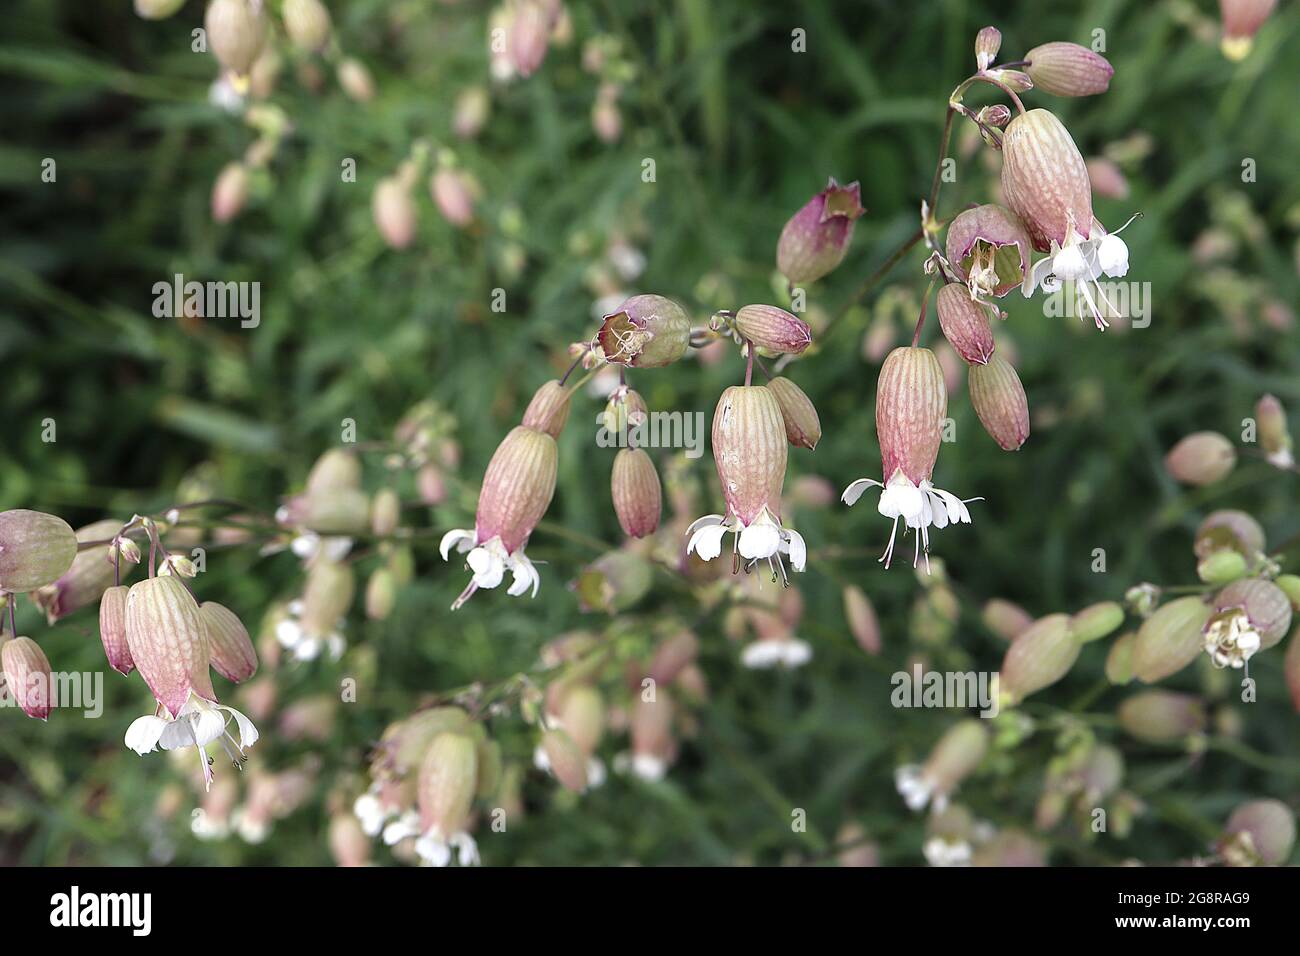 Silene vulgaris bladder campion – white spoon-shaped petals emerging from large purple calyx,  May, England, UK Stock Photo